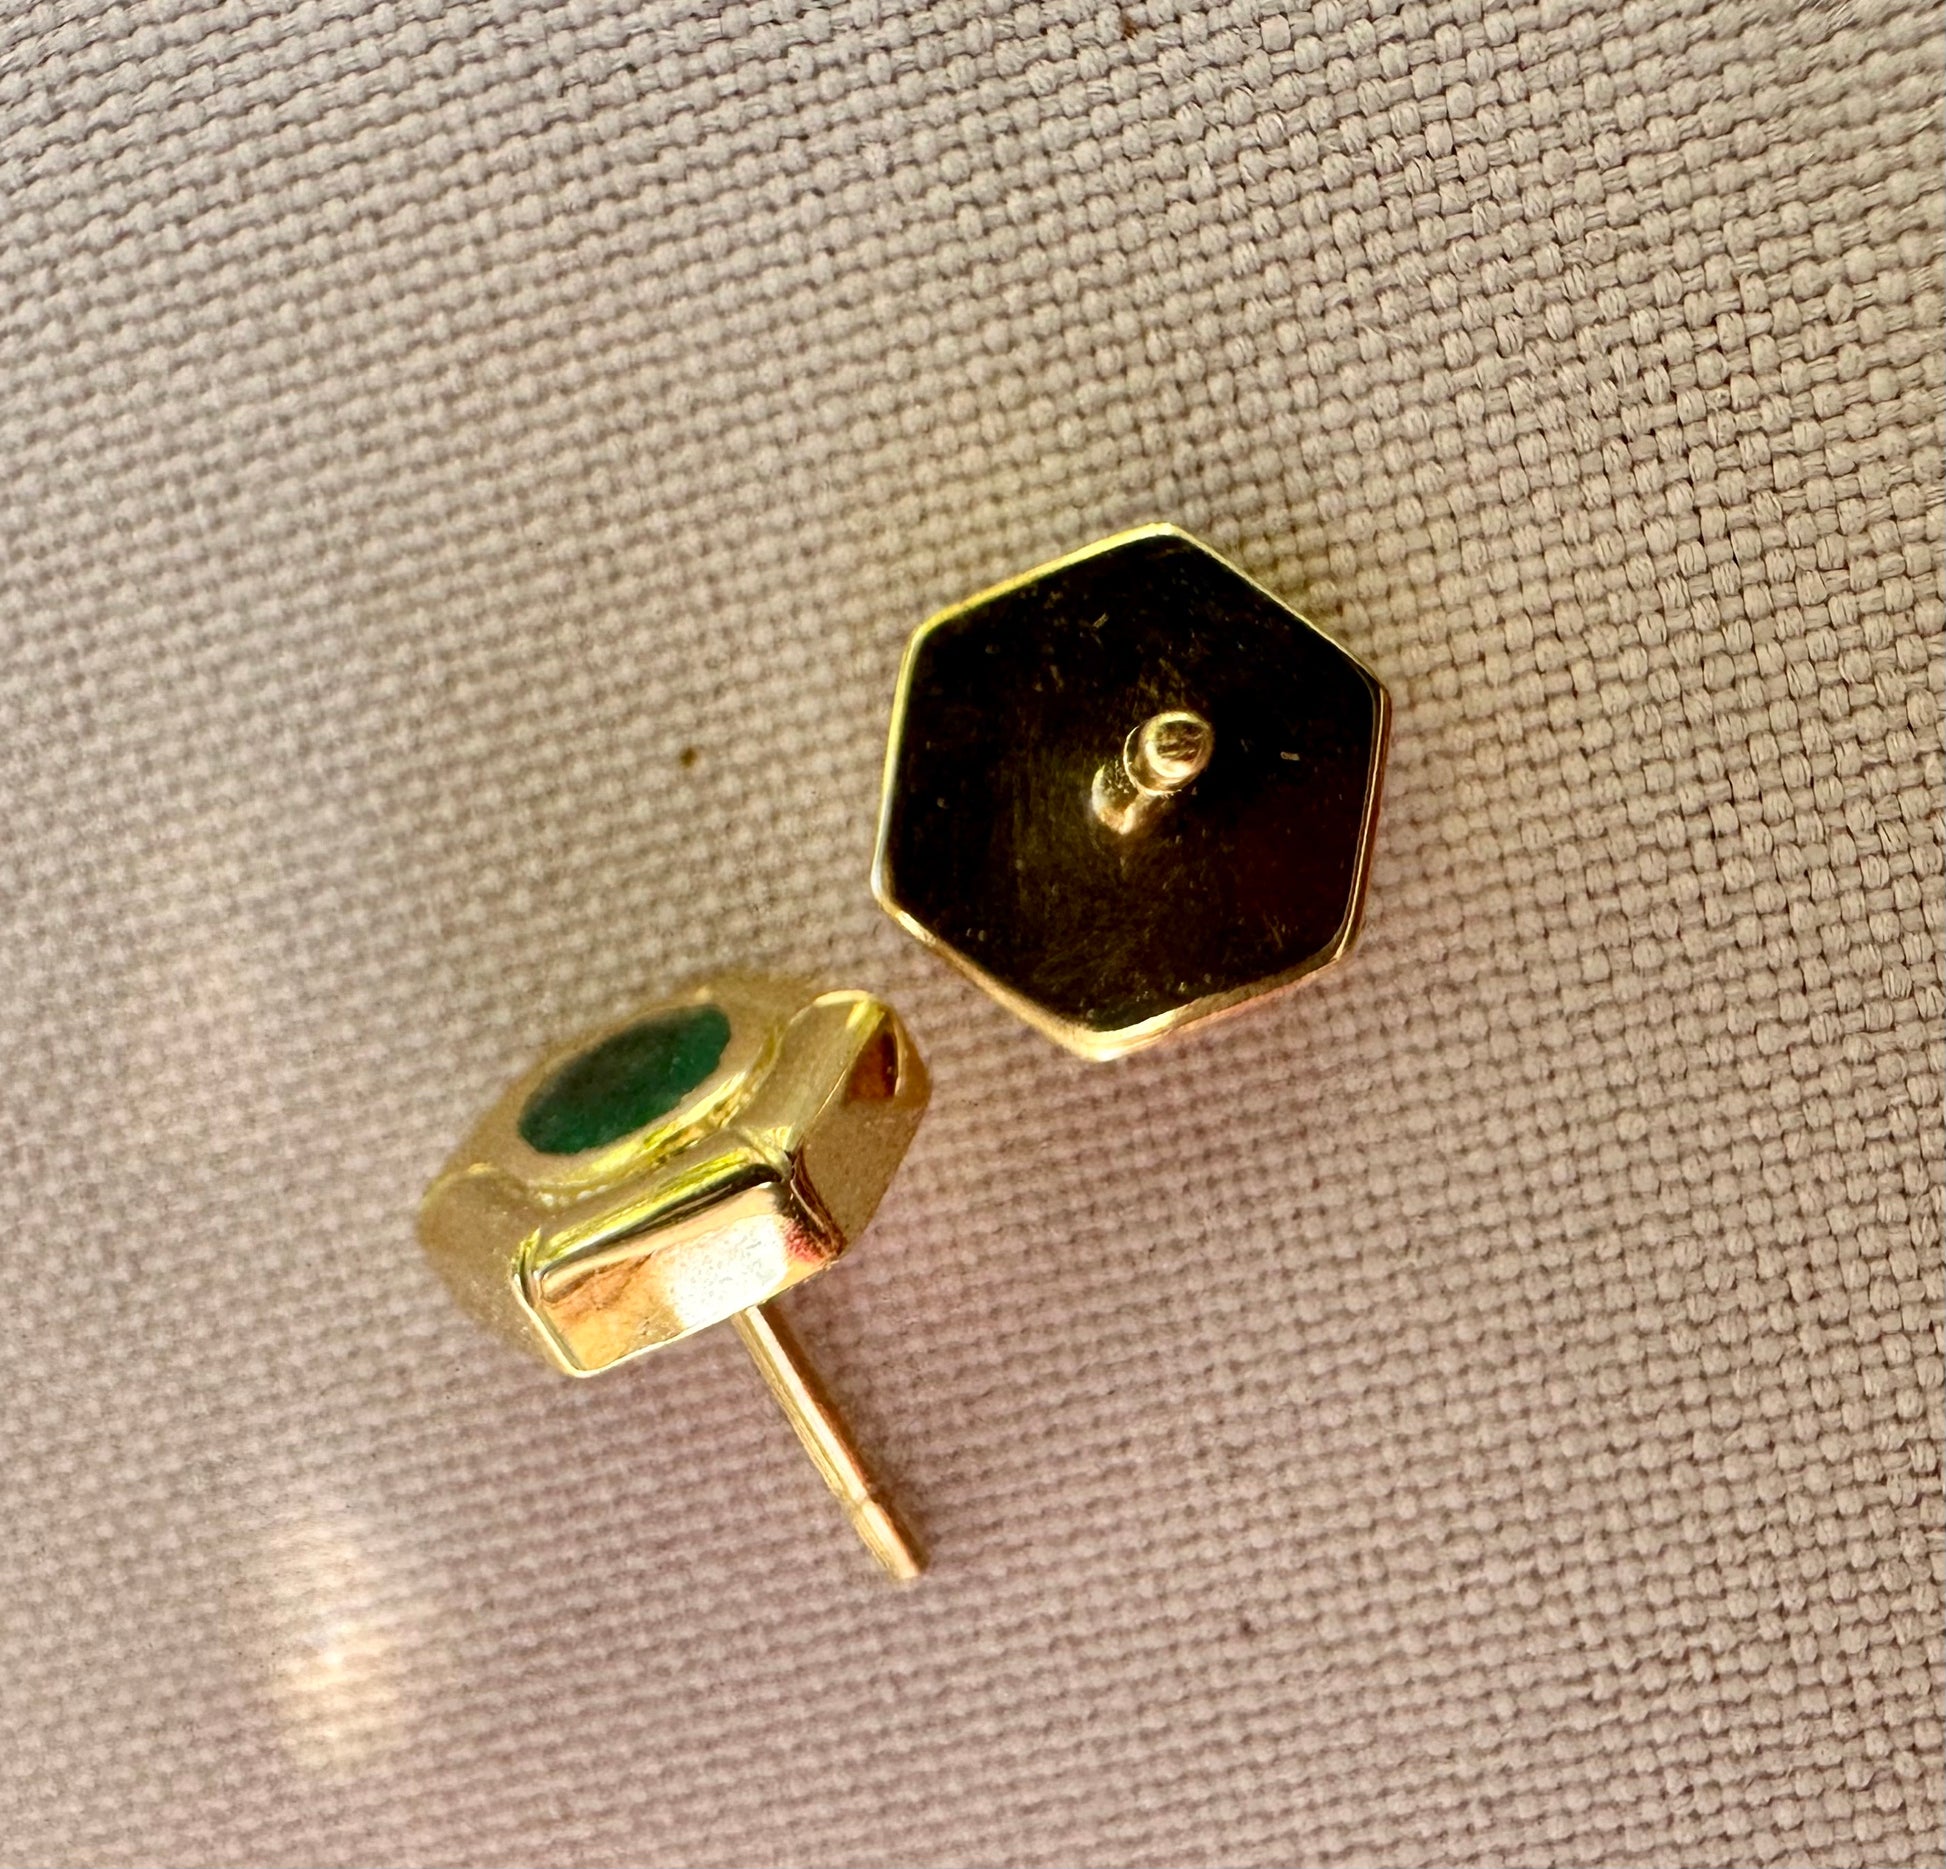 Timeless Emeralds stud earrings 18Kt yellow gold - Ella Creations Jewelry